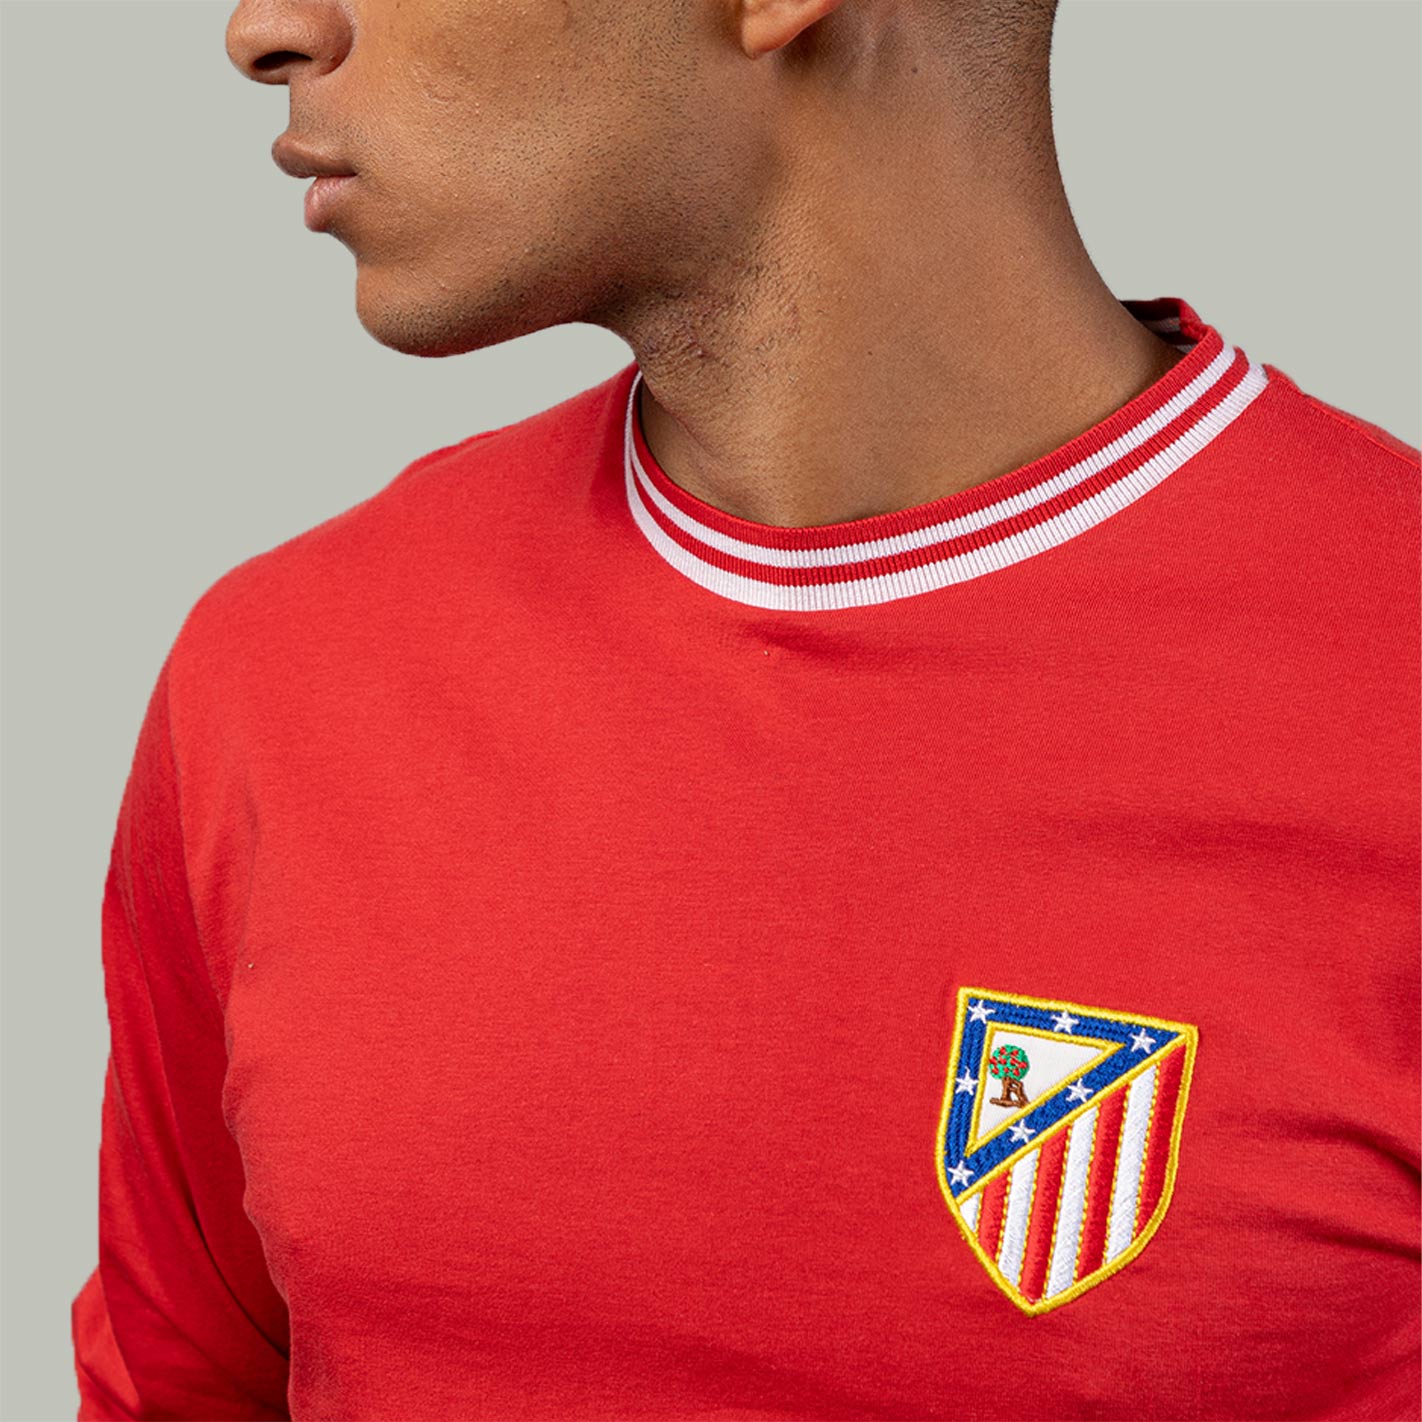 retroblog - Historia de la camiseta del Atlético de Madrid